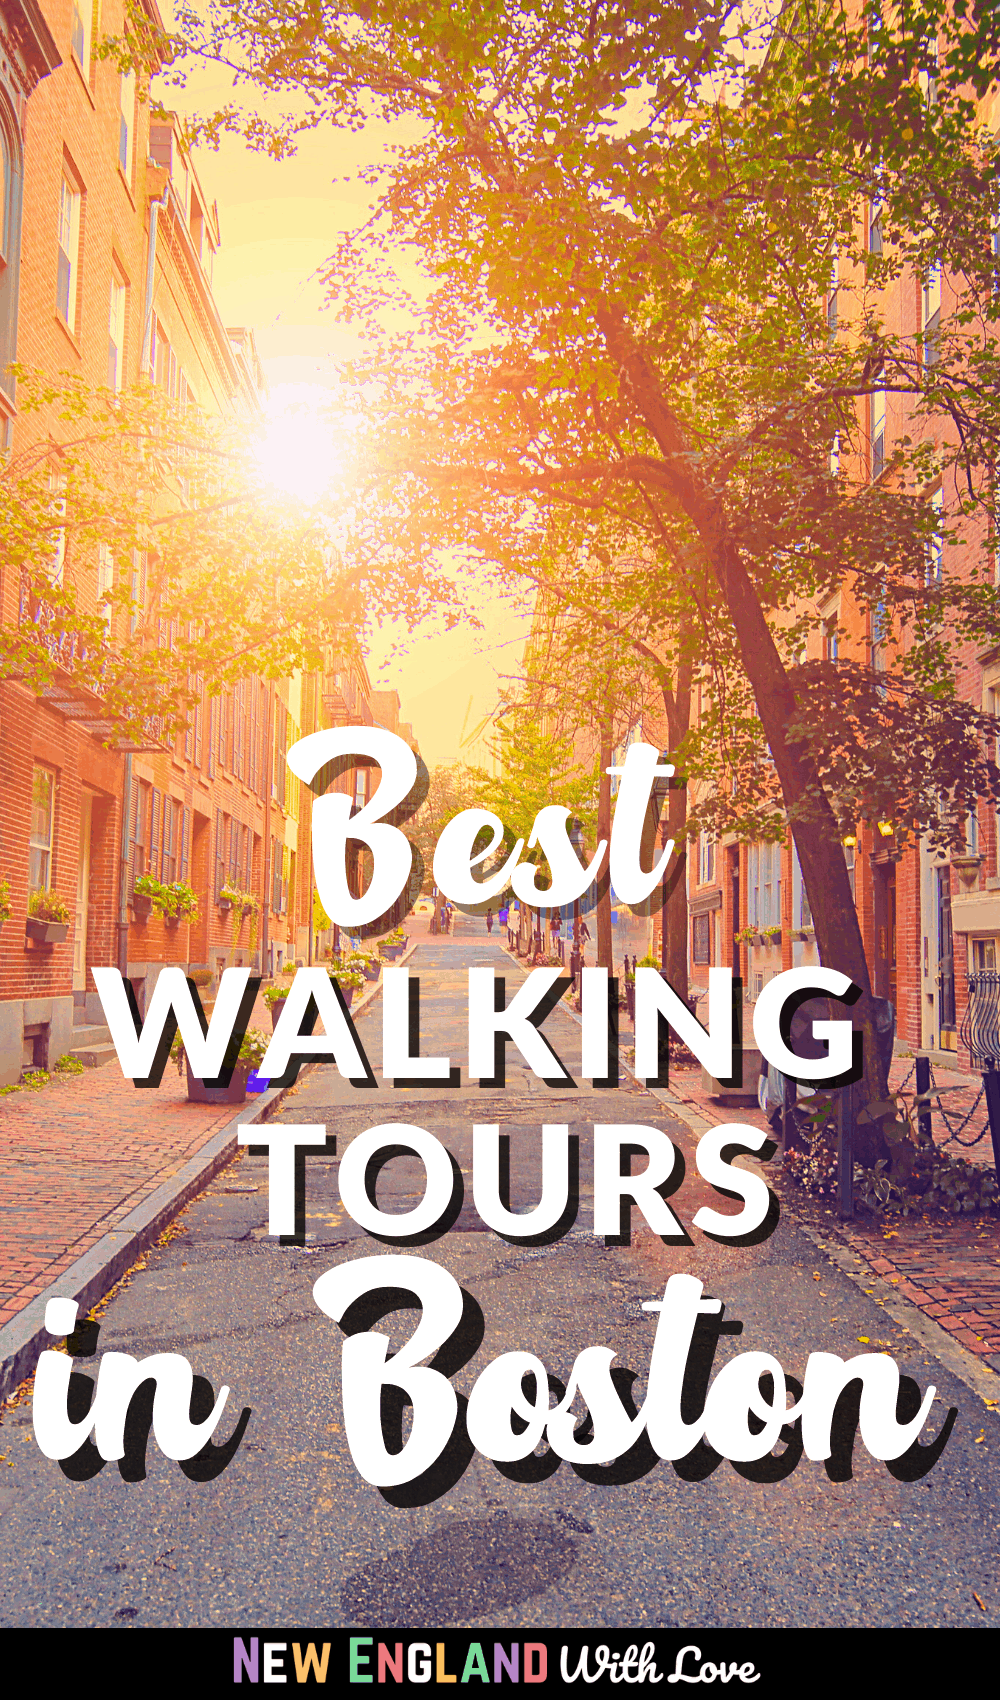 Pinterest graphic reading "Best Walking Tours in Boston"